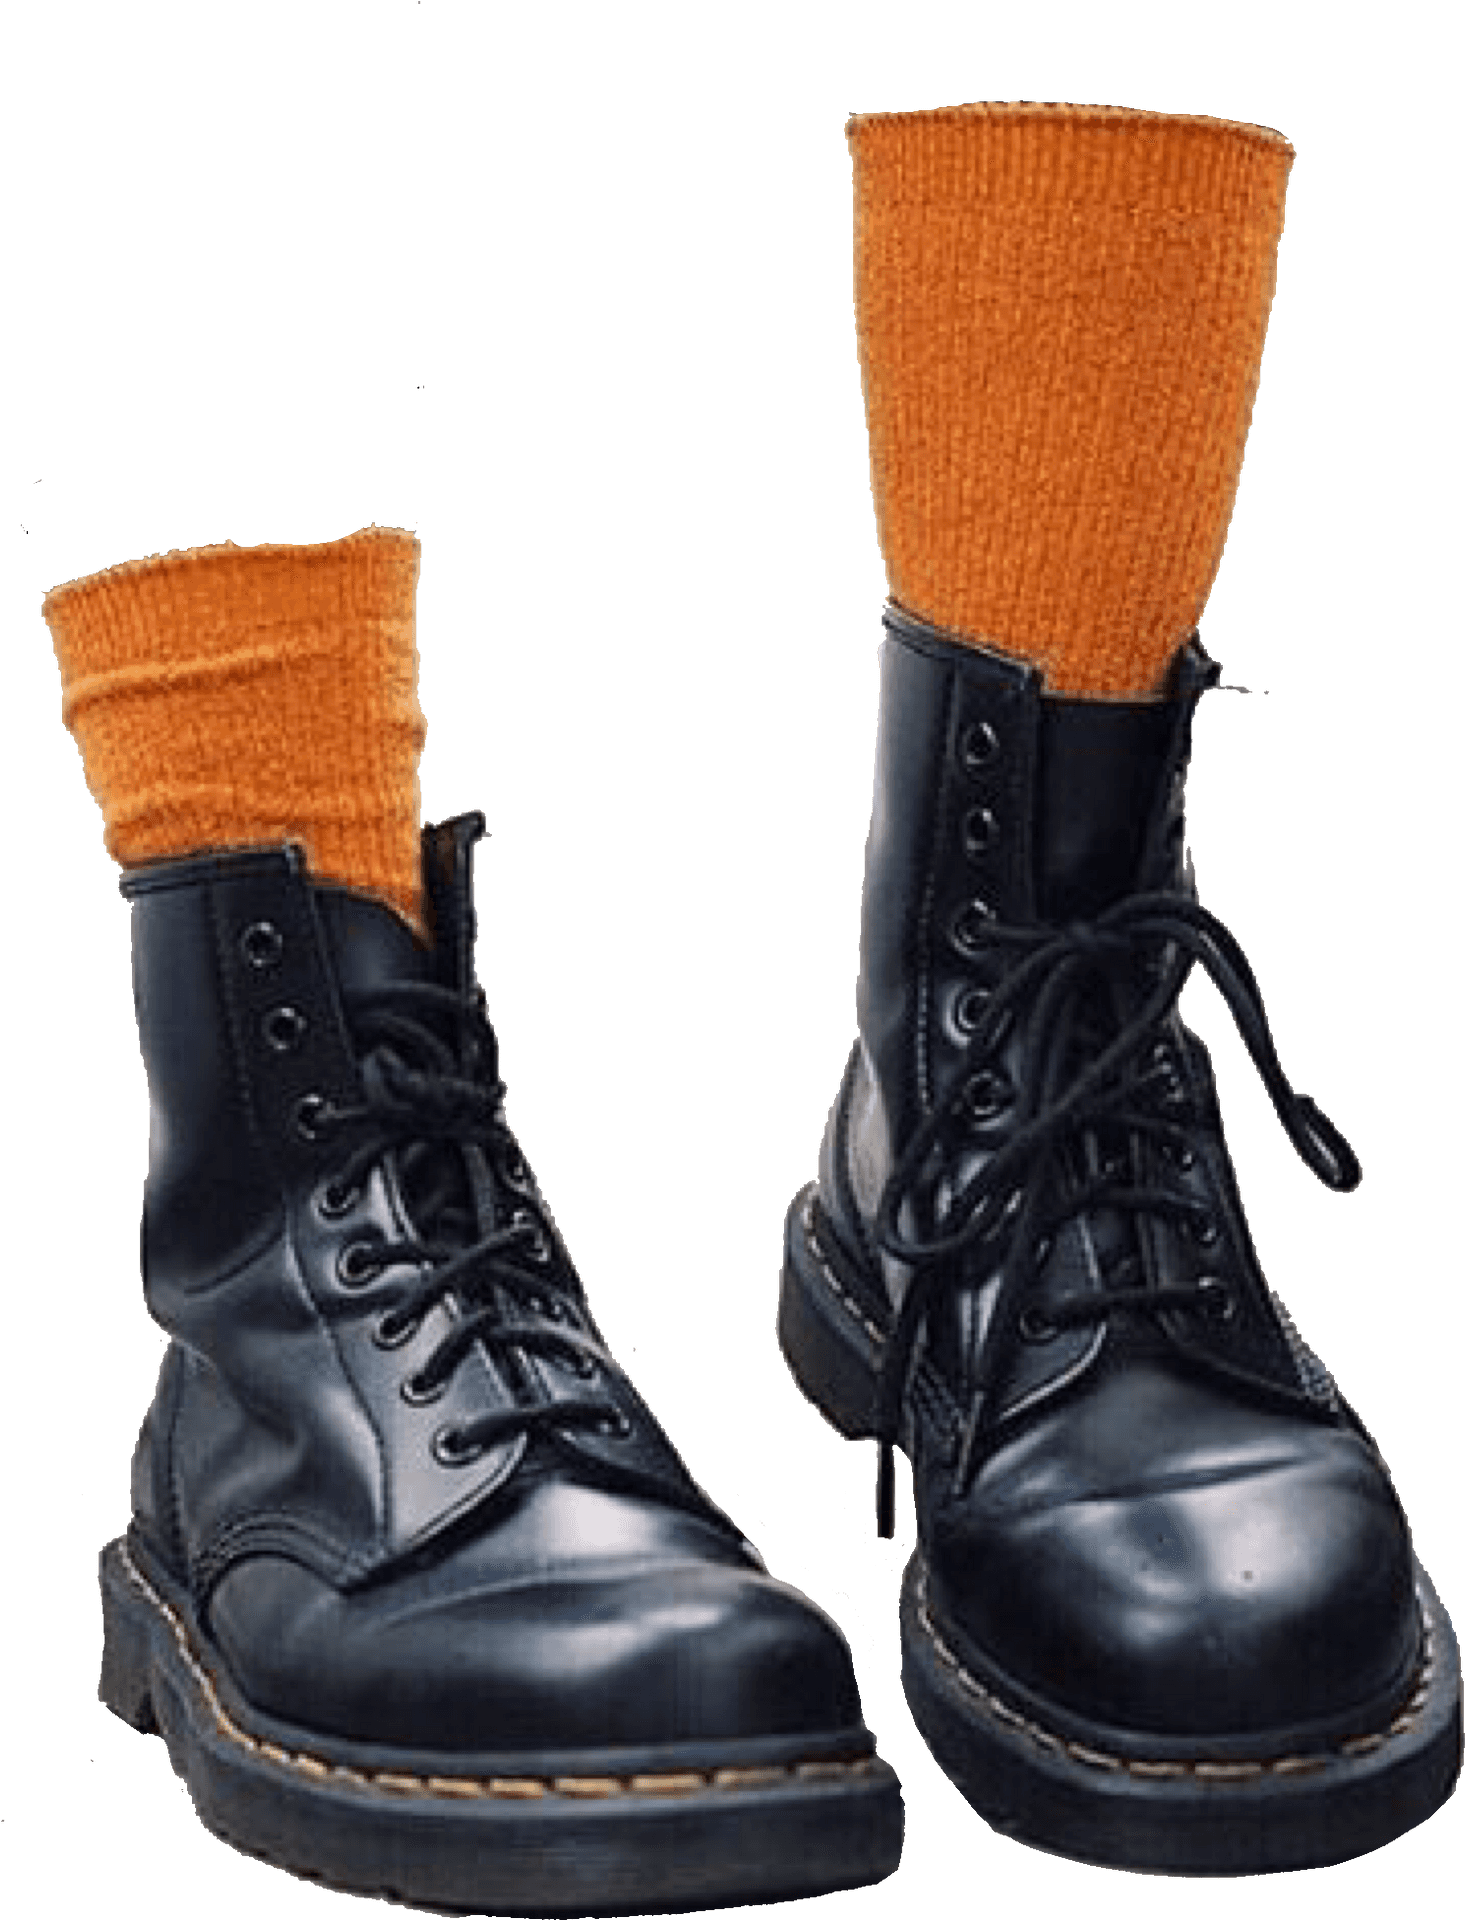 Black Boots With Orange Socks PNG image